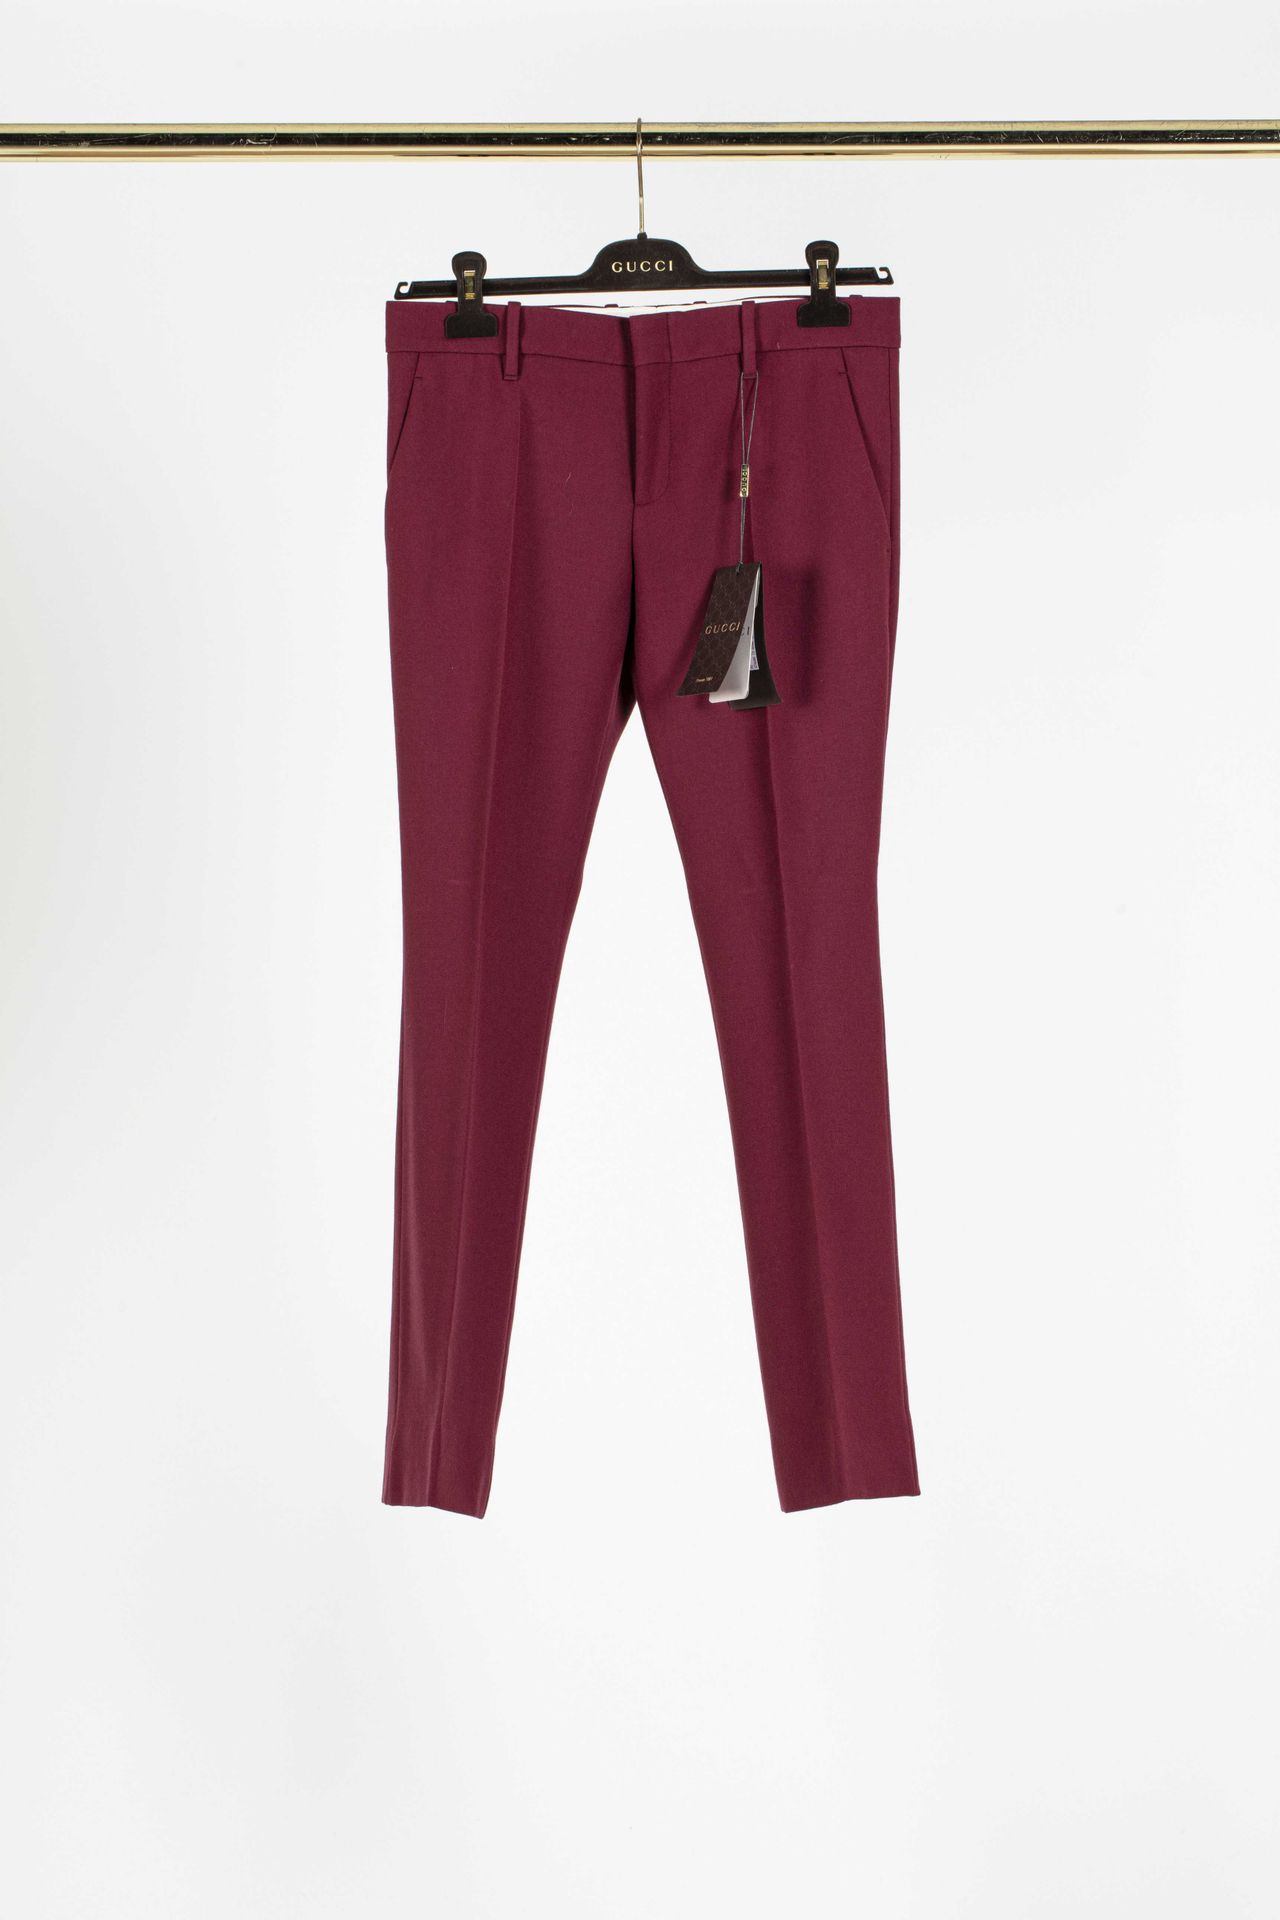 Null GUCCI：酒红色羊毛长裤套装，包括直筒裤和一件带有几何图案衬里的夹克，缺口领，单排扣，四个贴袋，长袖。

T.S